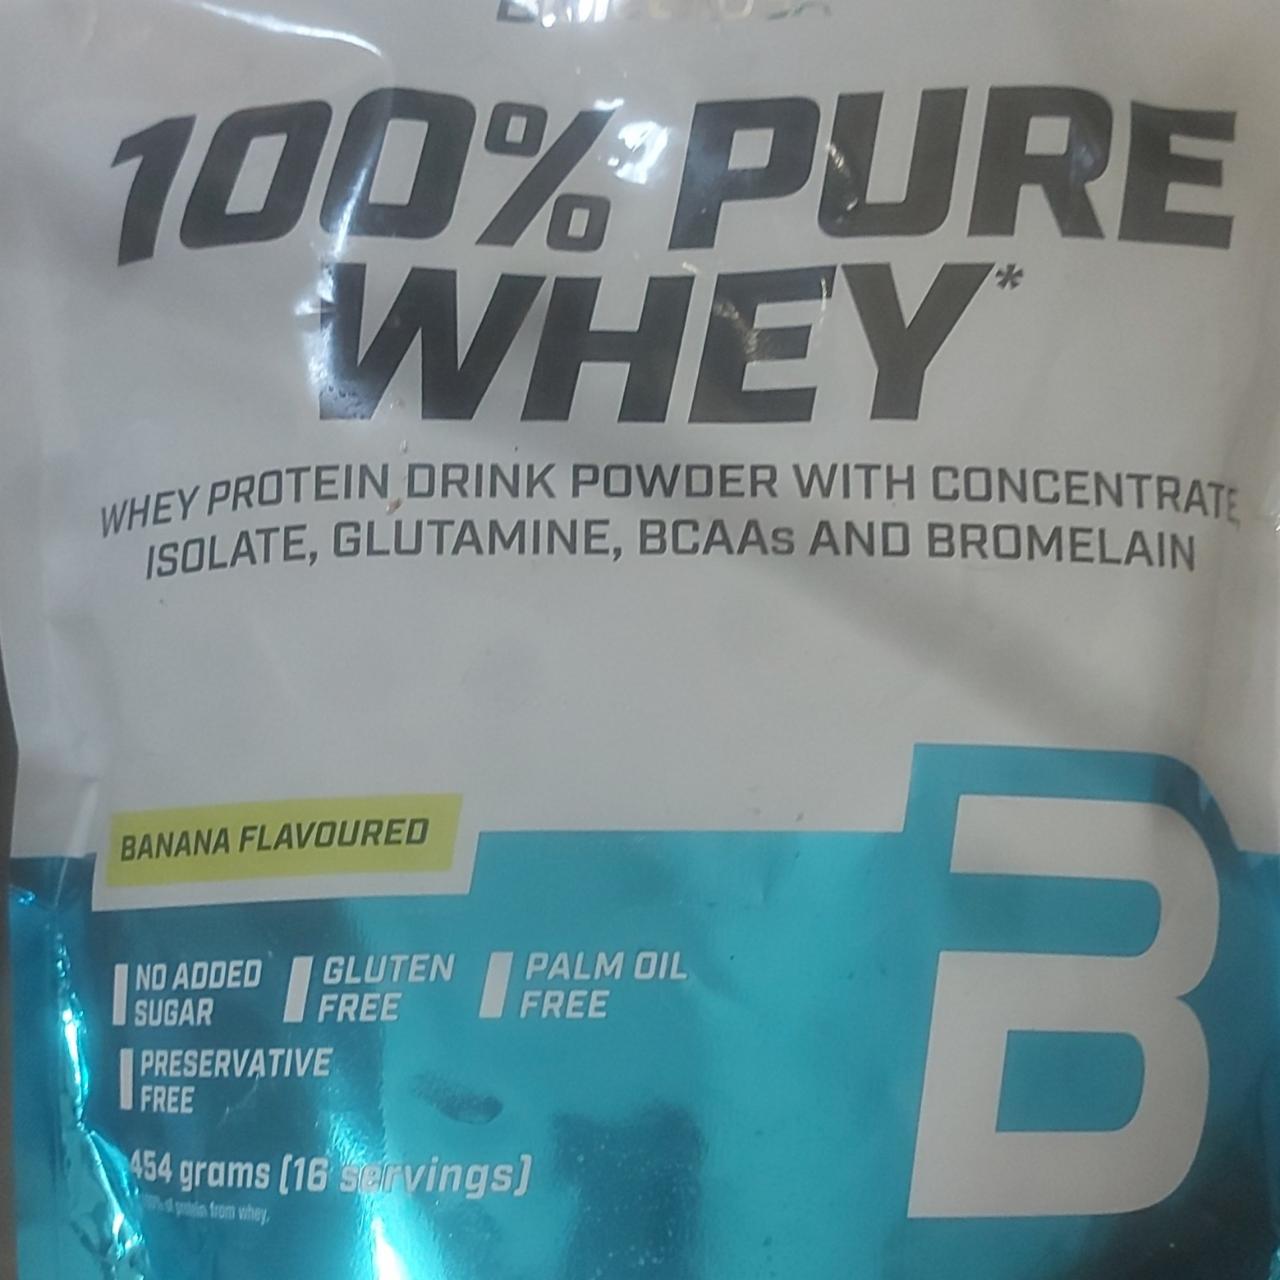 Képek - 100% pure whey protein drink powder Banana flavoured BioTechUSA